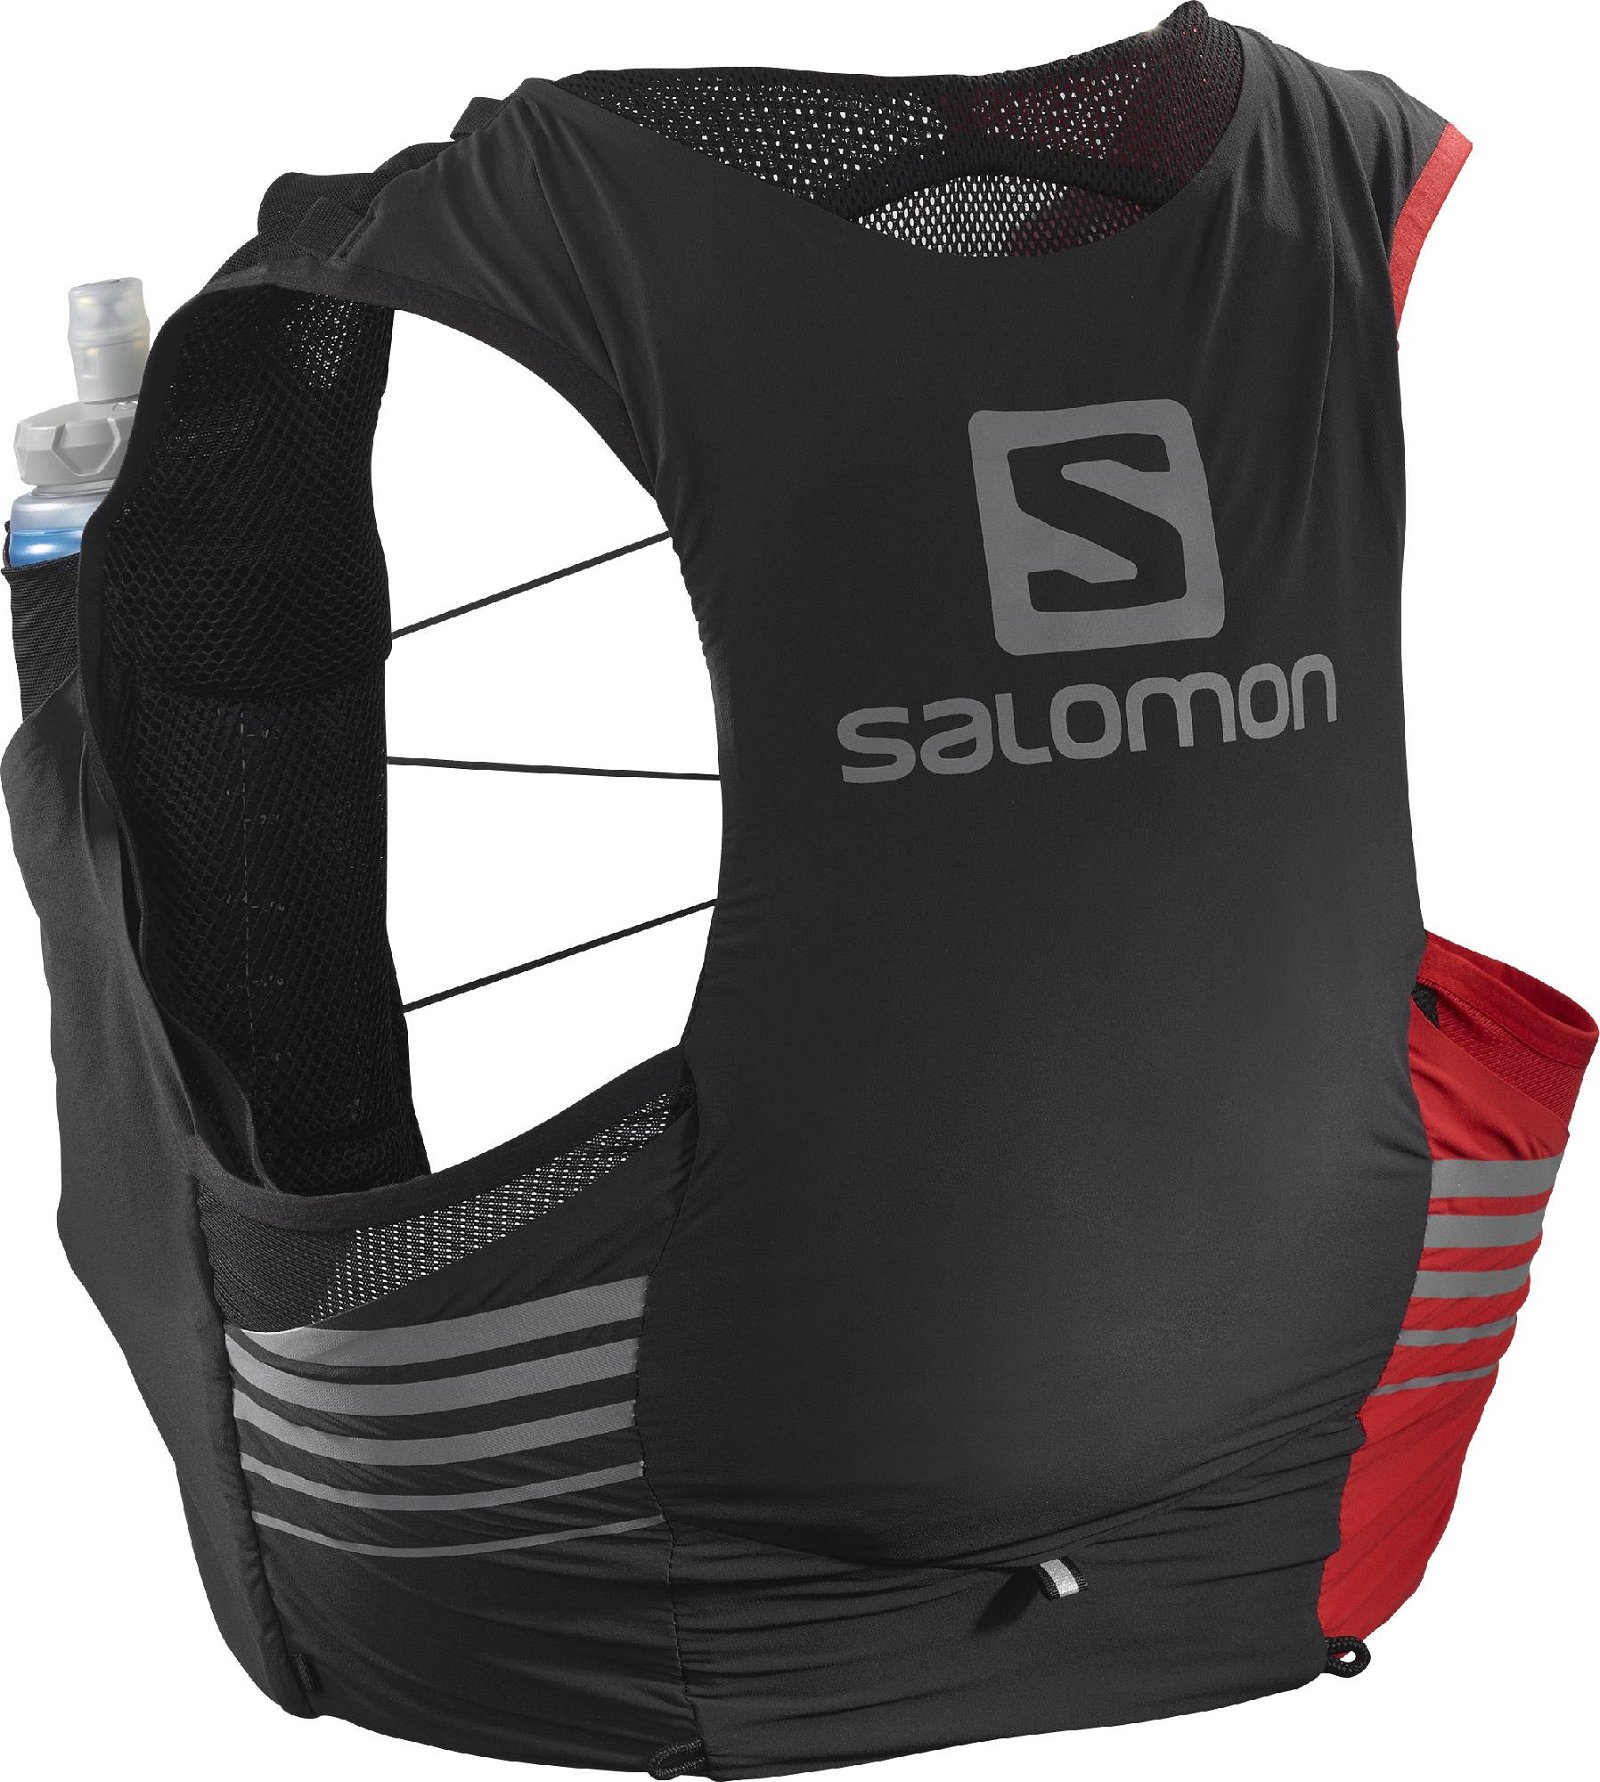 Salomon Sense 5 Set M's Ltd Edition